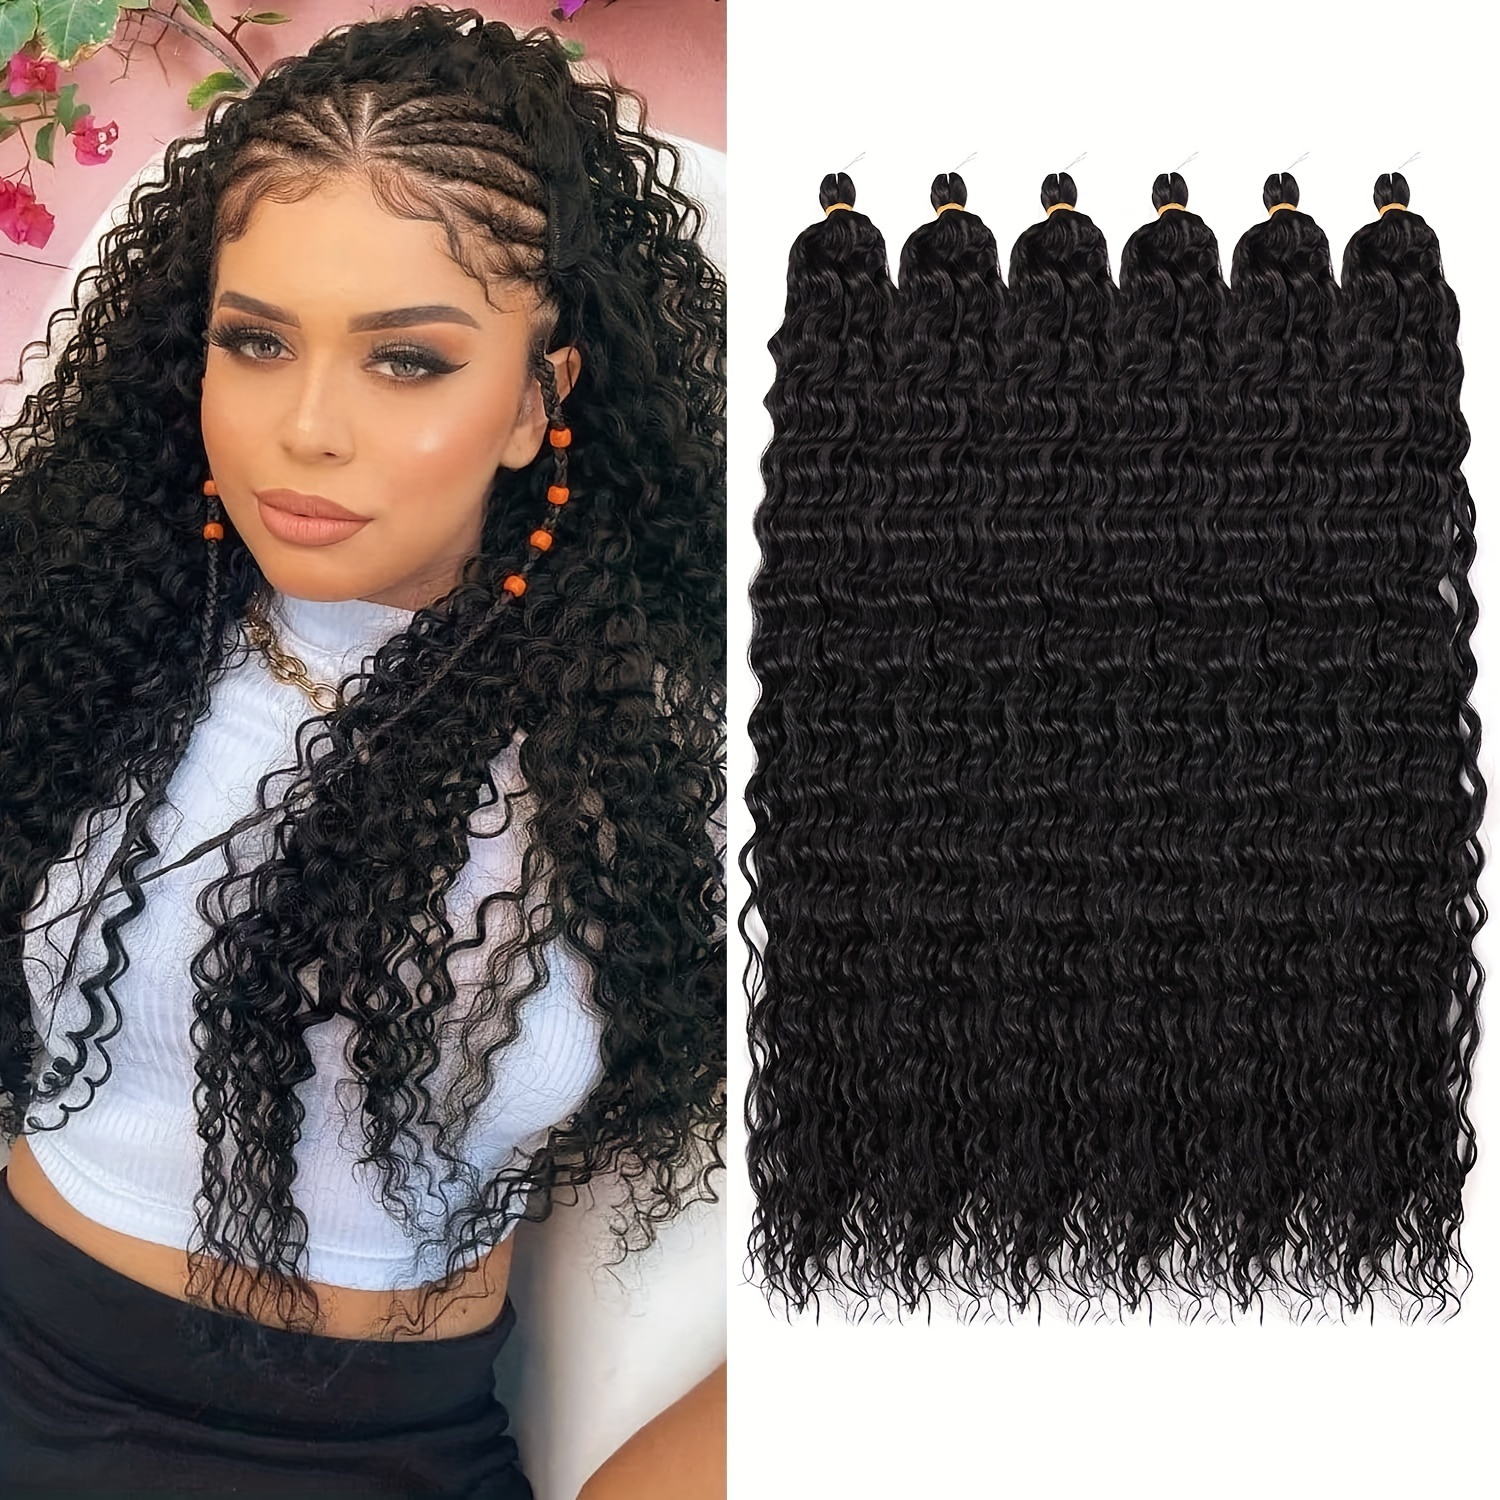 9 inch Ocean Wave Crochet Hair for Black Women Short Wavy Crochet Braids  126 Roots Pre Looped Deep Wave Crochet Hair 7 Packs Natural Black Ocean  Wave